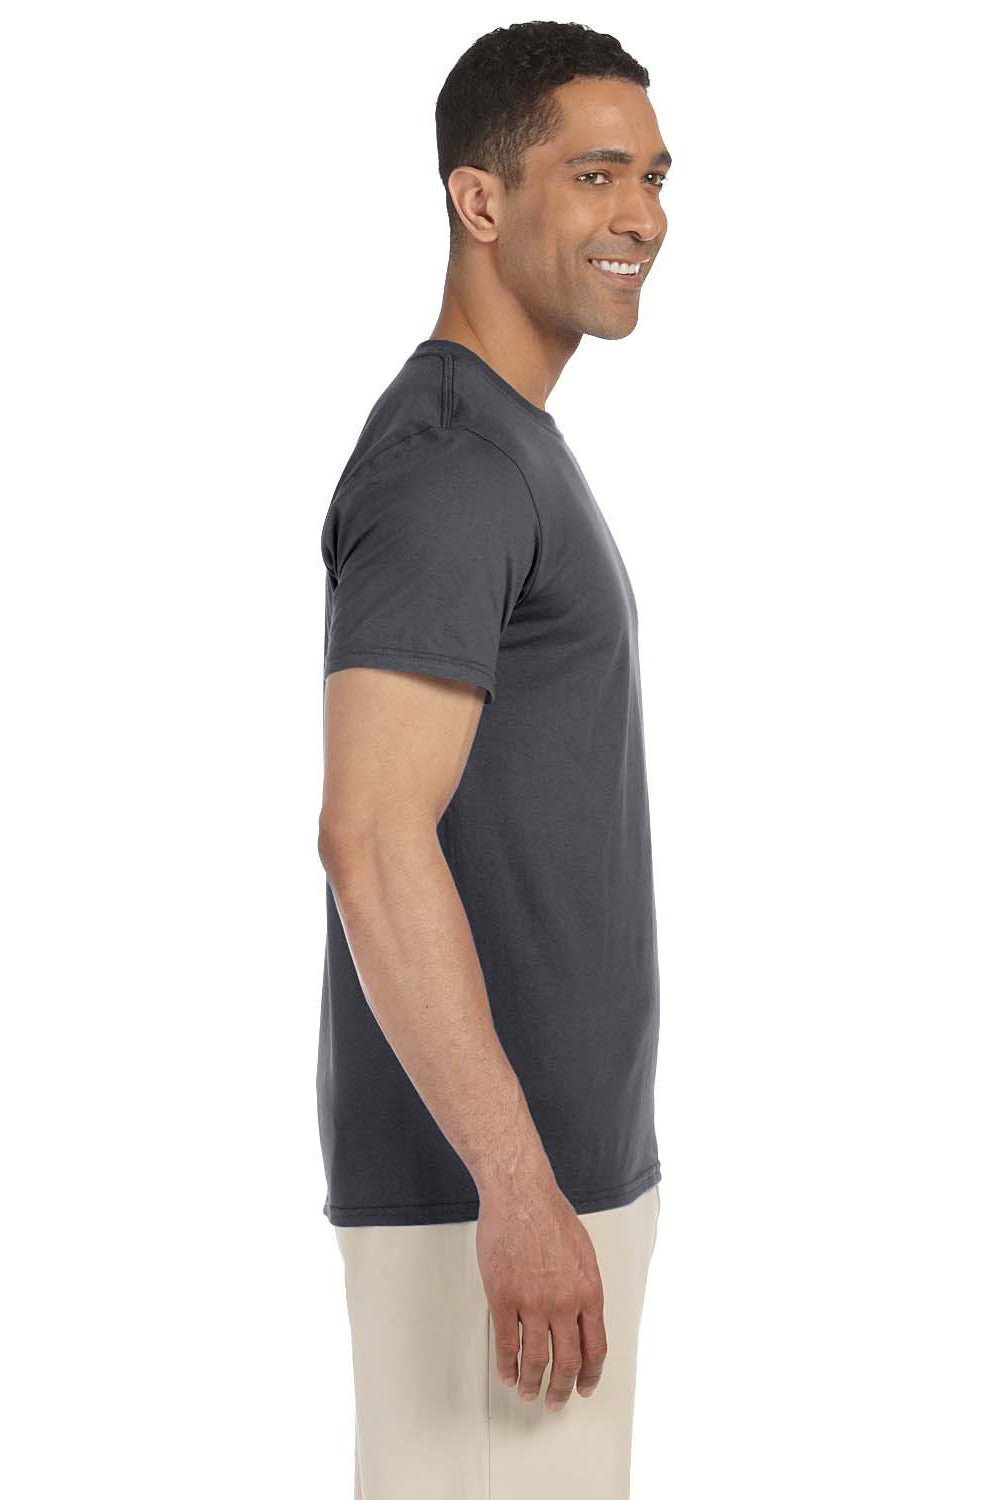 Gildan G640 Mens Softstyle Short Sleeve Crewneck T-Shirt Charcoal Grey Side